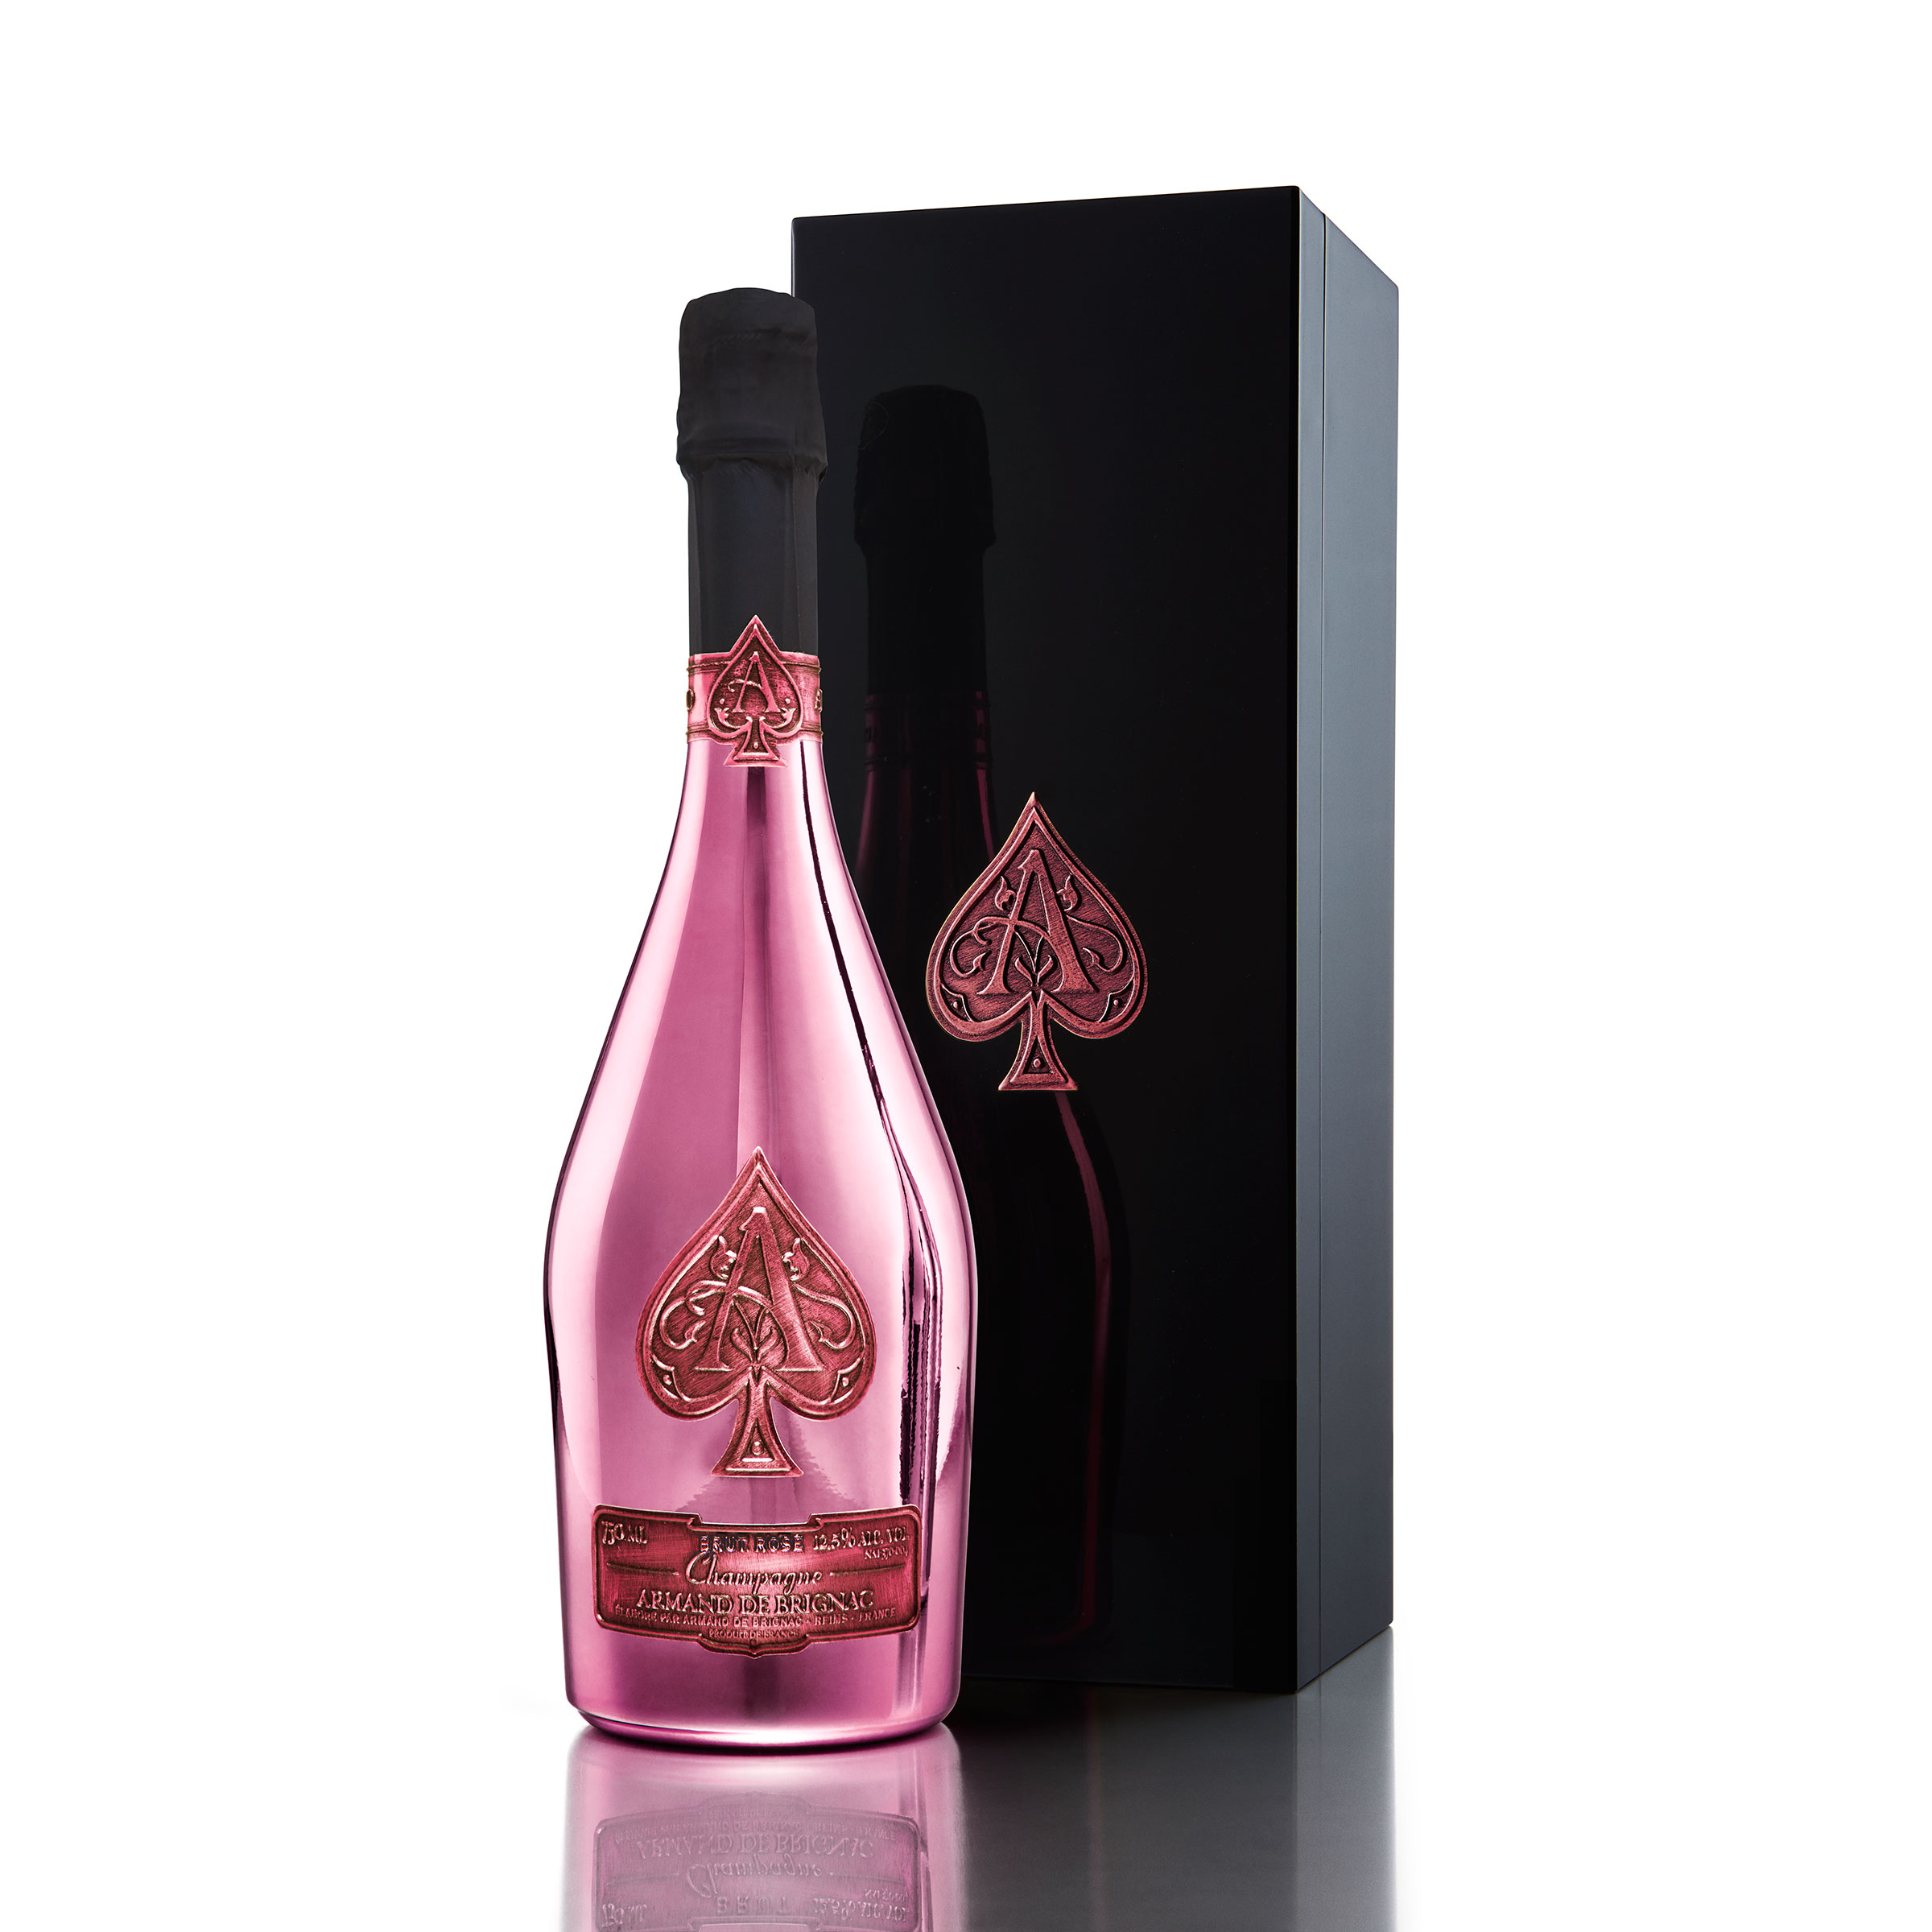 Buy & Send Armand de Brignac Brut Rose NV Champagne 75cl in Branded Box